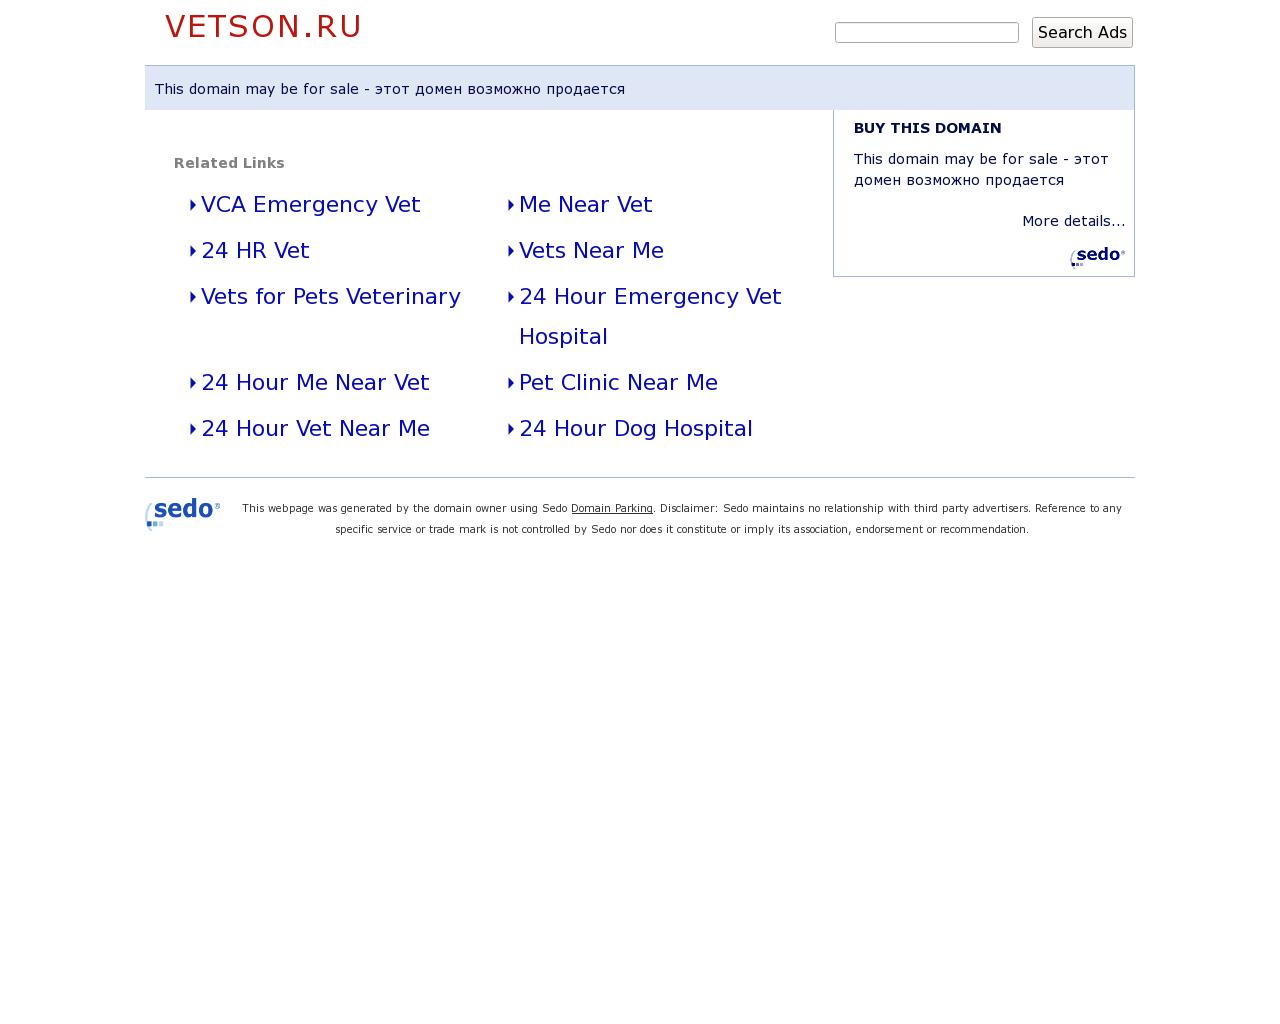 Изображение сайта vetson.ru в разрешении 1280x1024